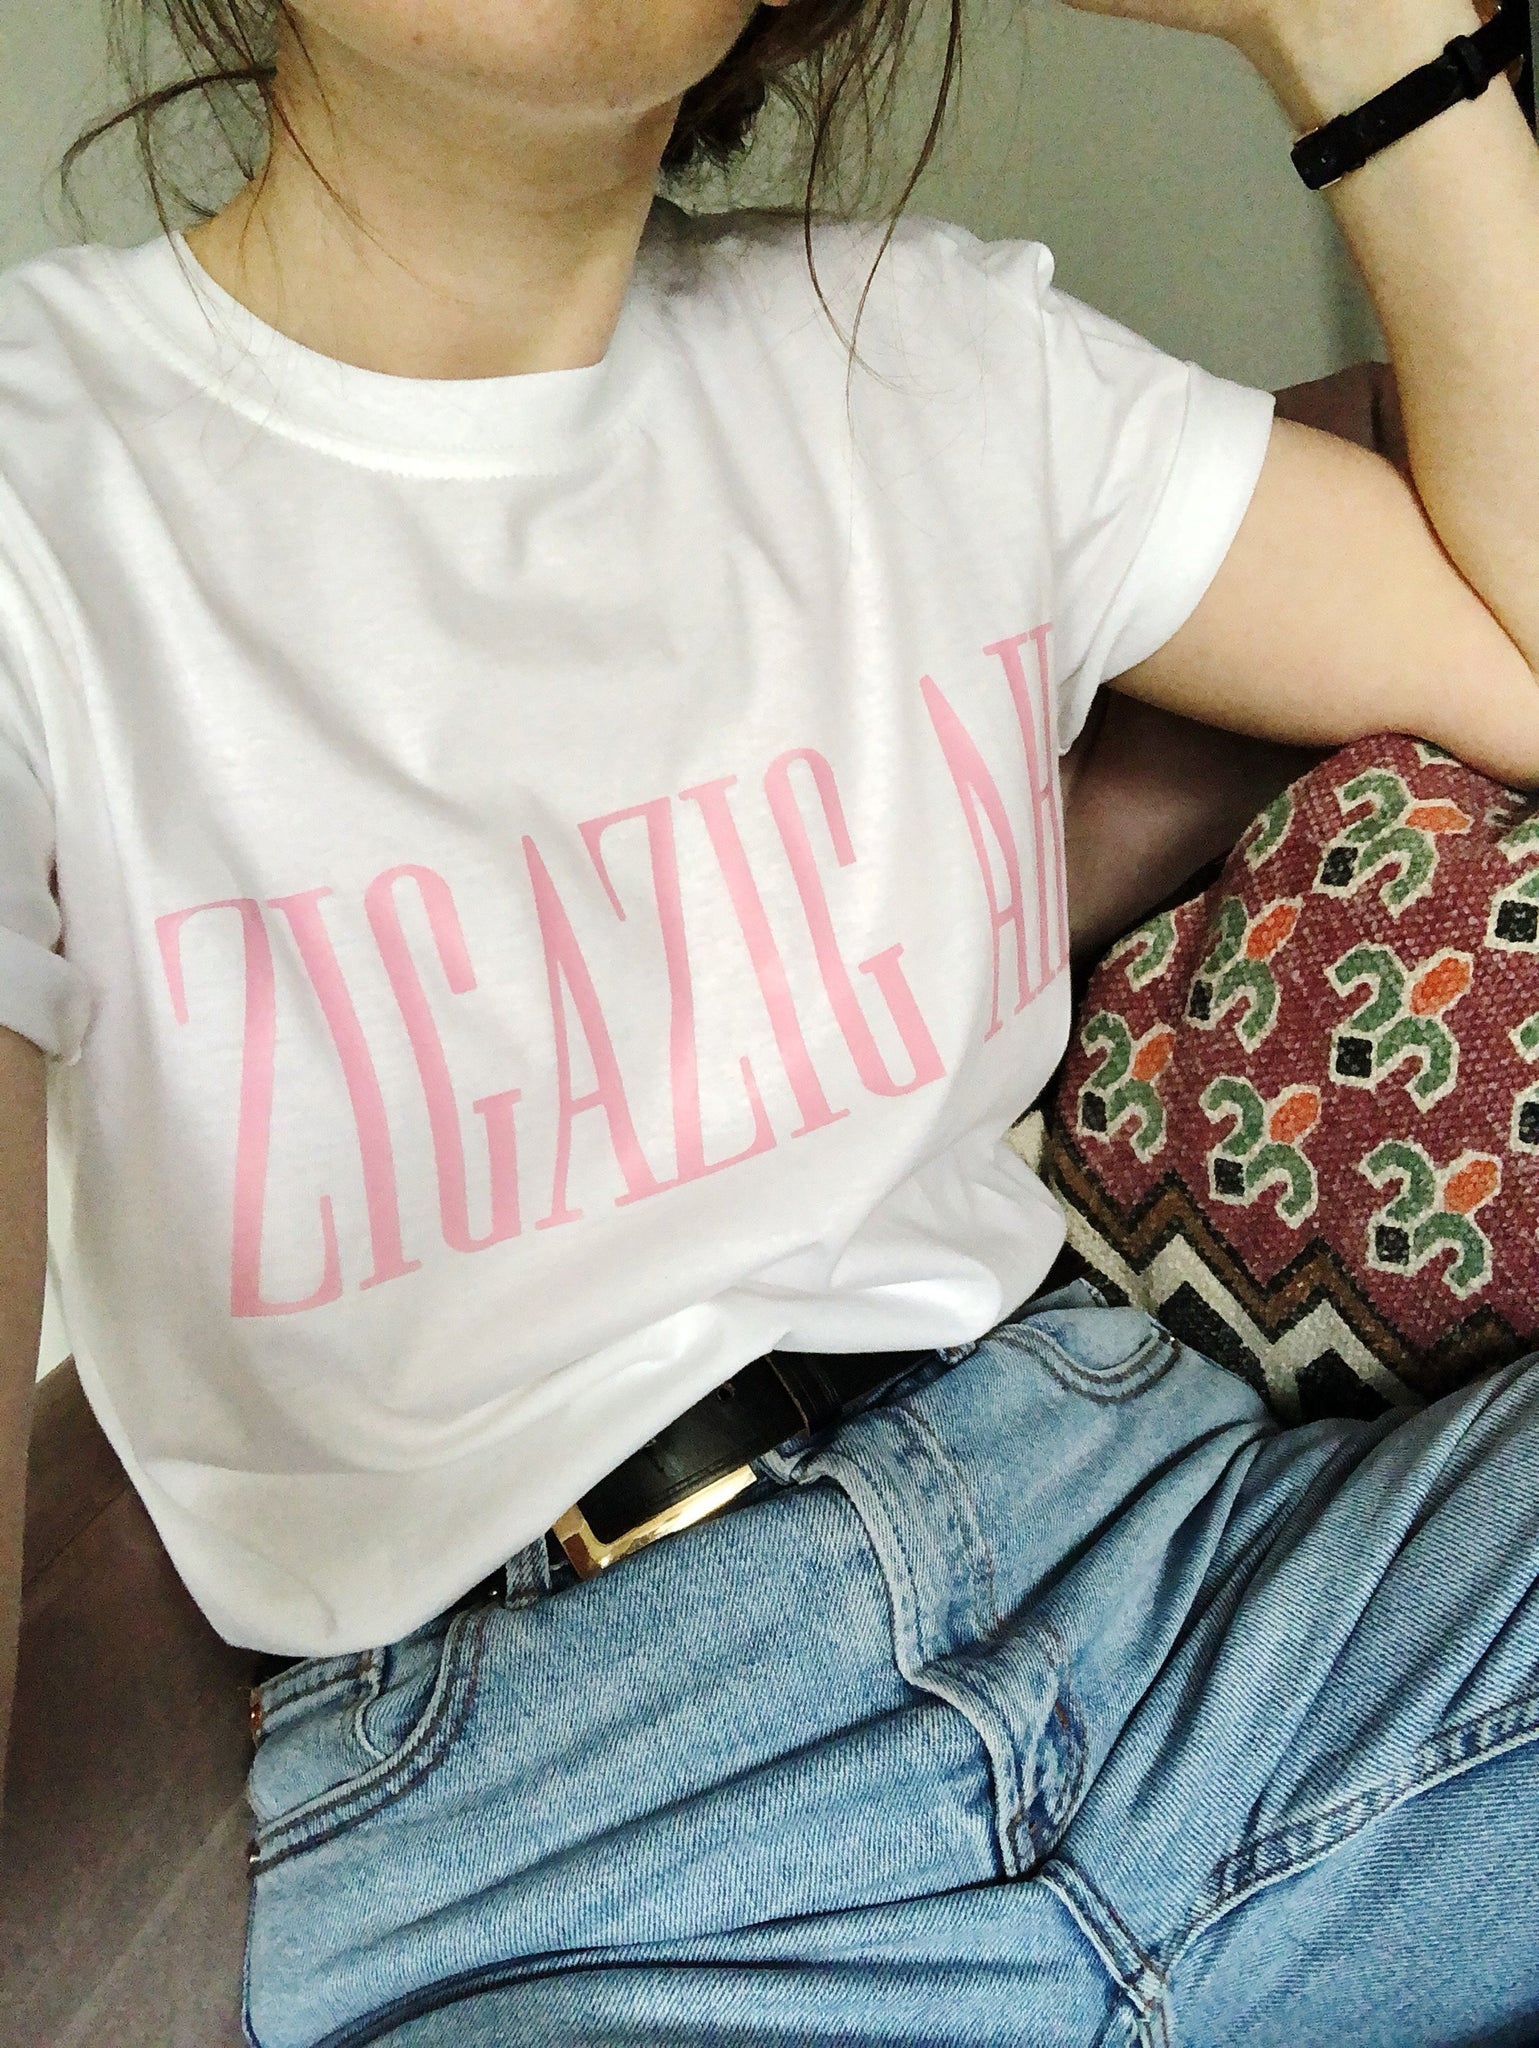 Zigazig Ah - Unisex Fit T-Shirt